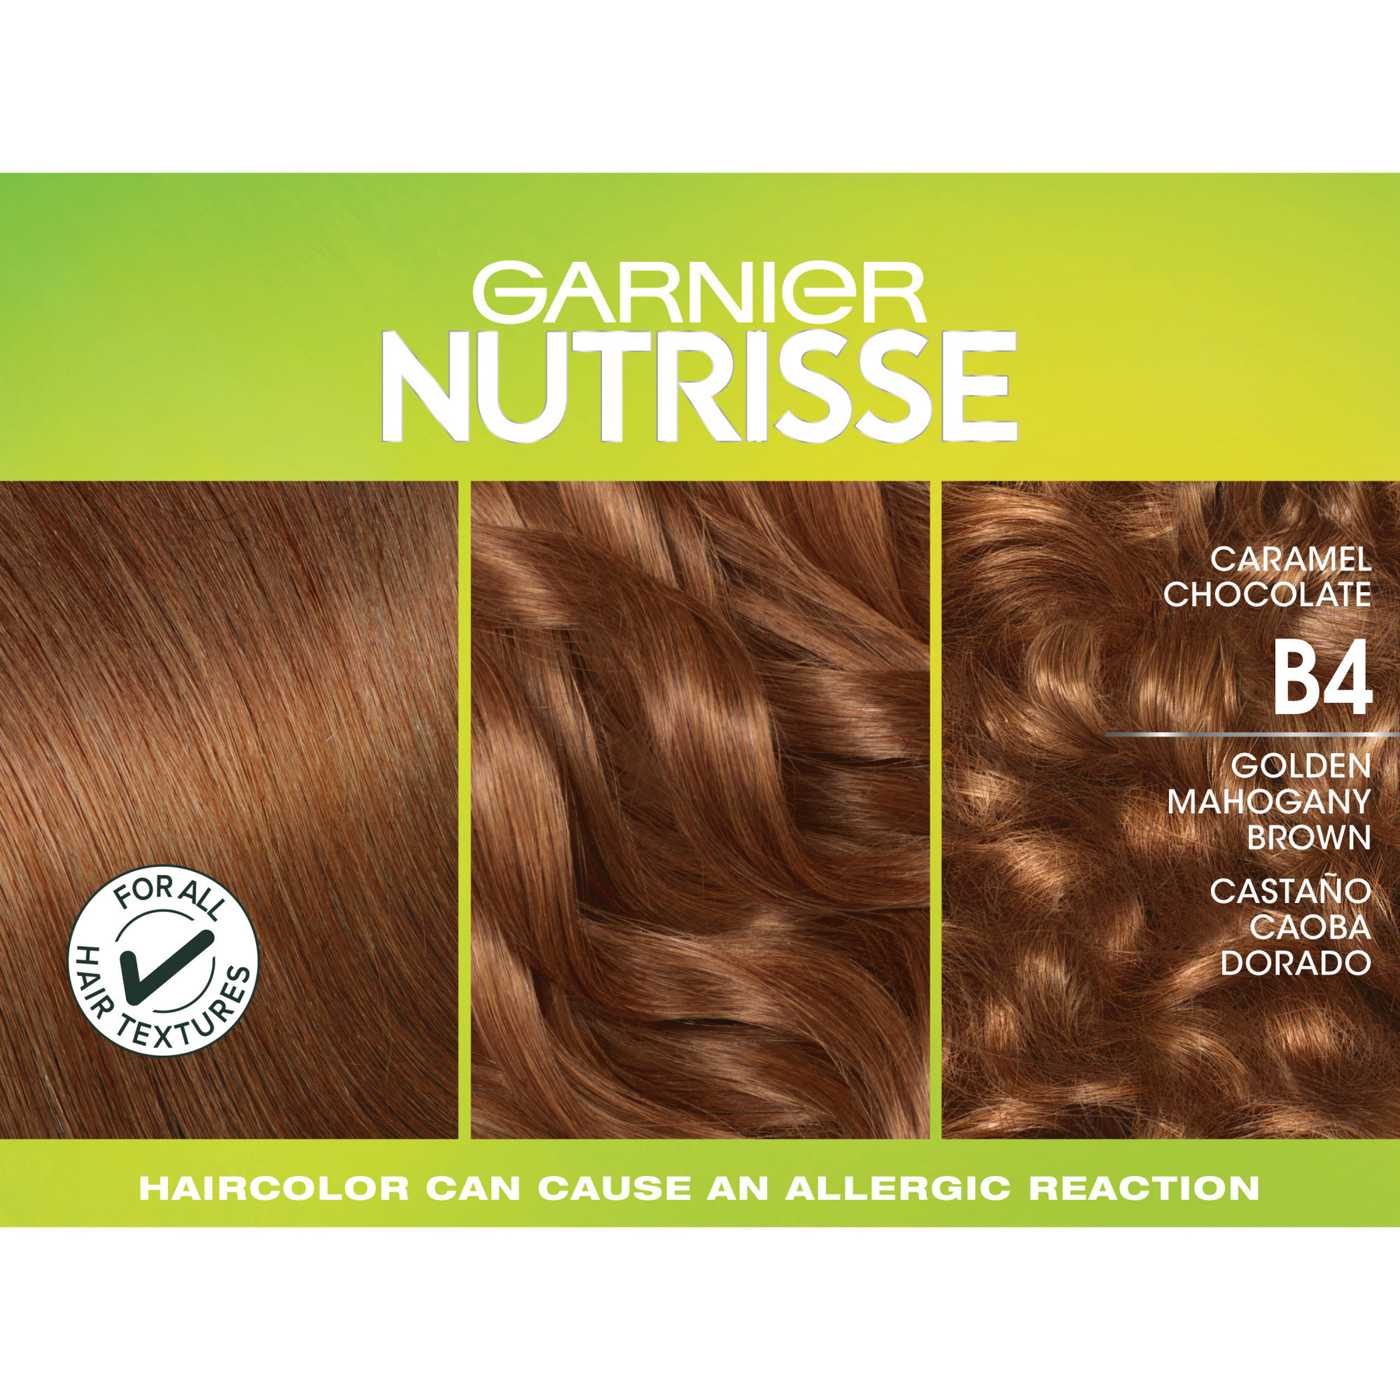 Garnier Nutrisse Ultra Color Nourishing Bold Permanent Hair Color Creme B4 Caramel Chocolate; image 7 of 8